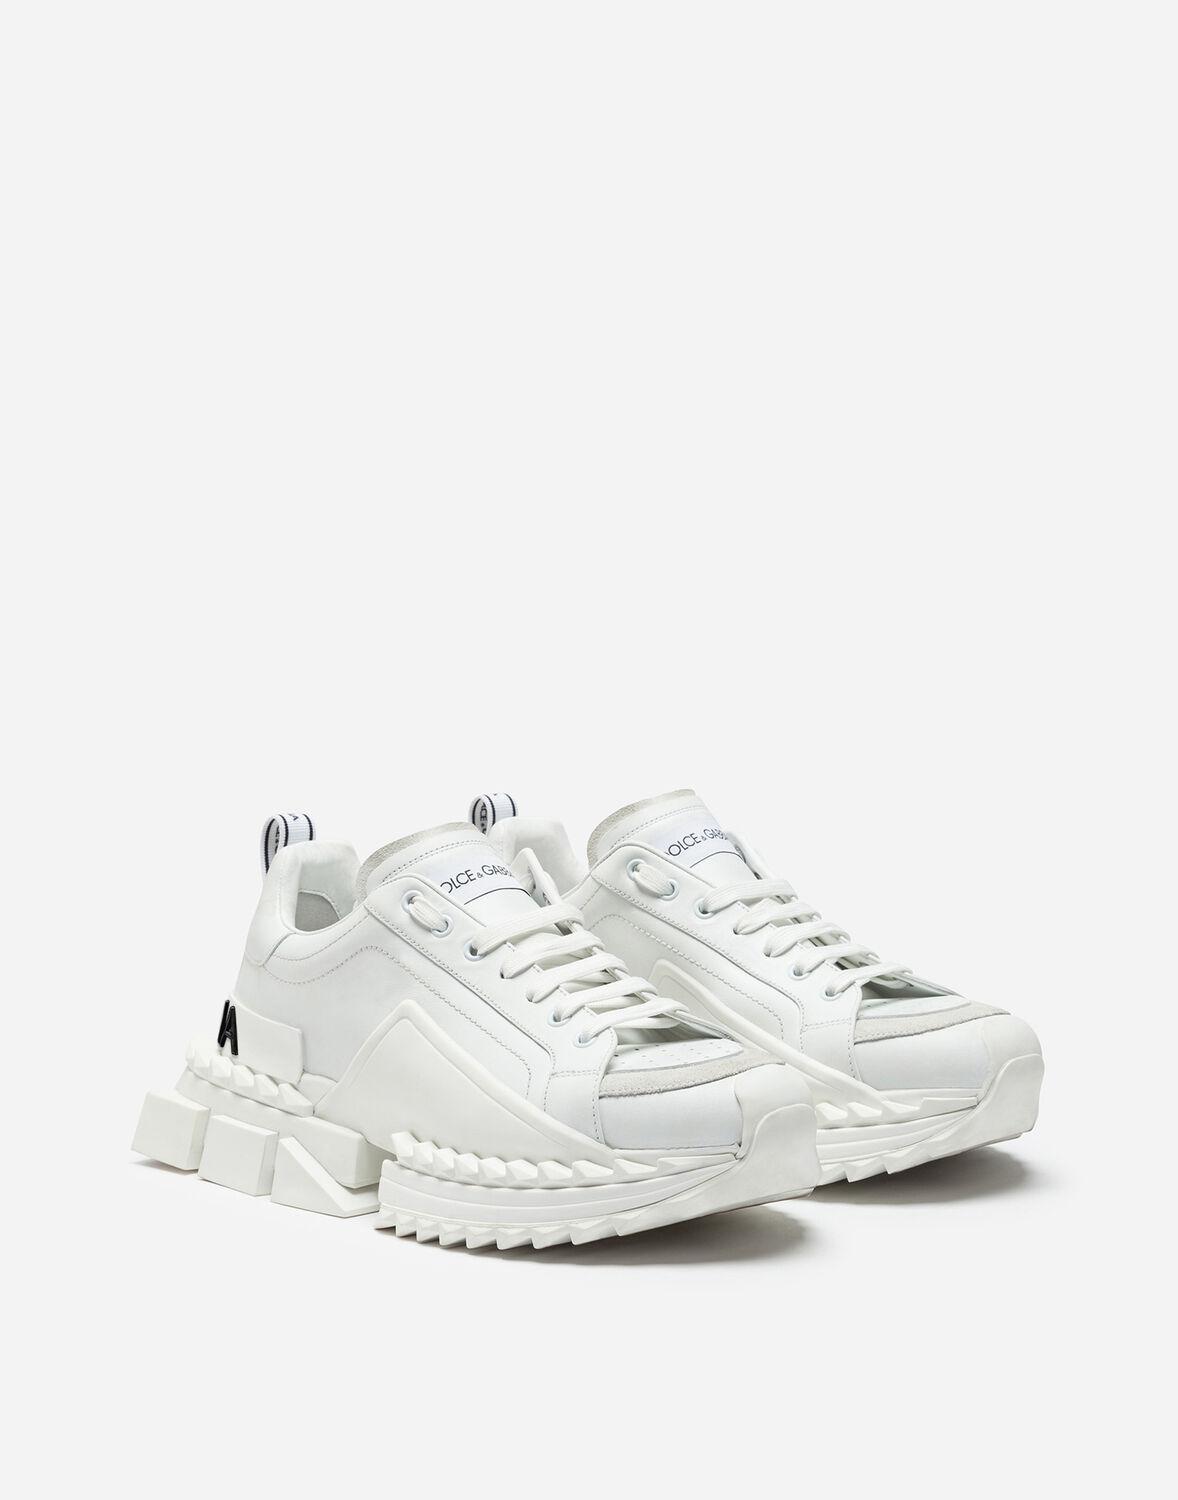 Dolce & Gabbana Super Queen Sneakers In Calfskin in White | Lyst